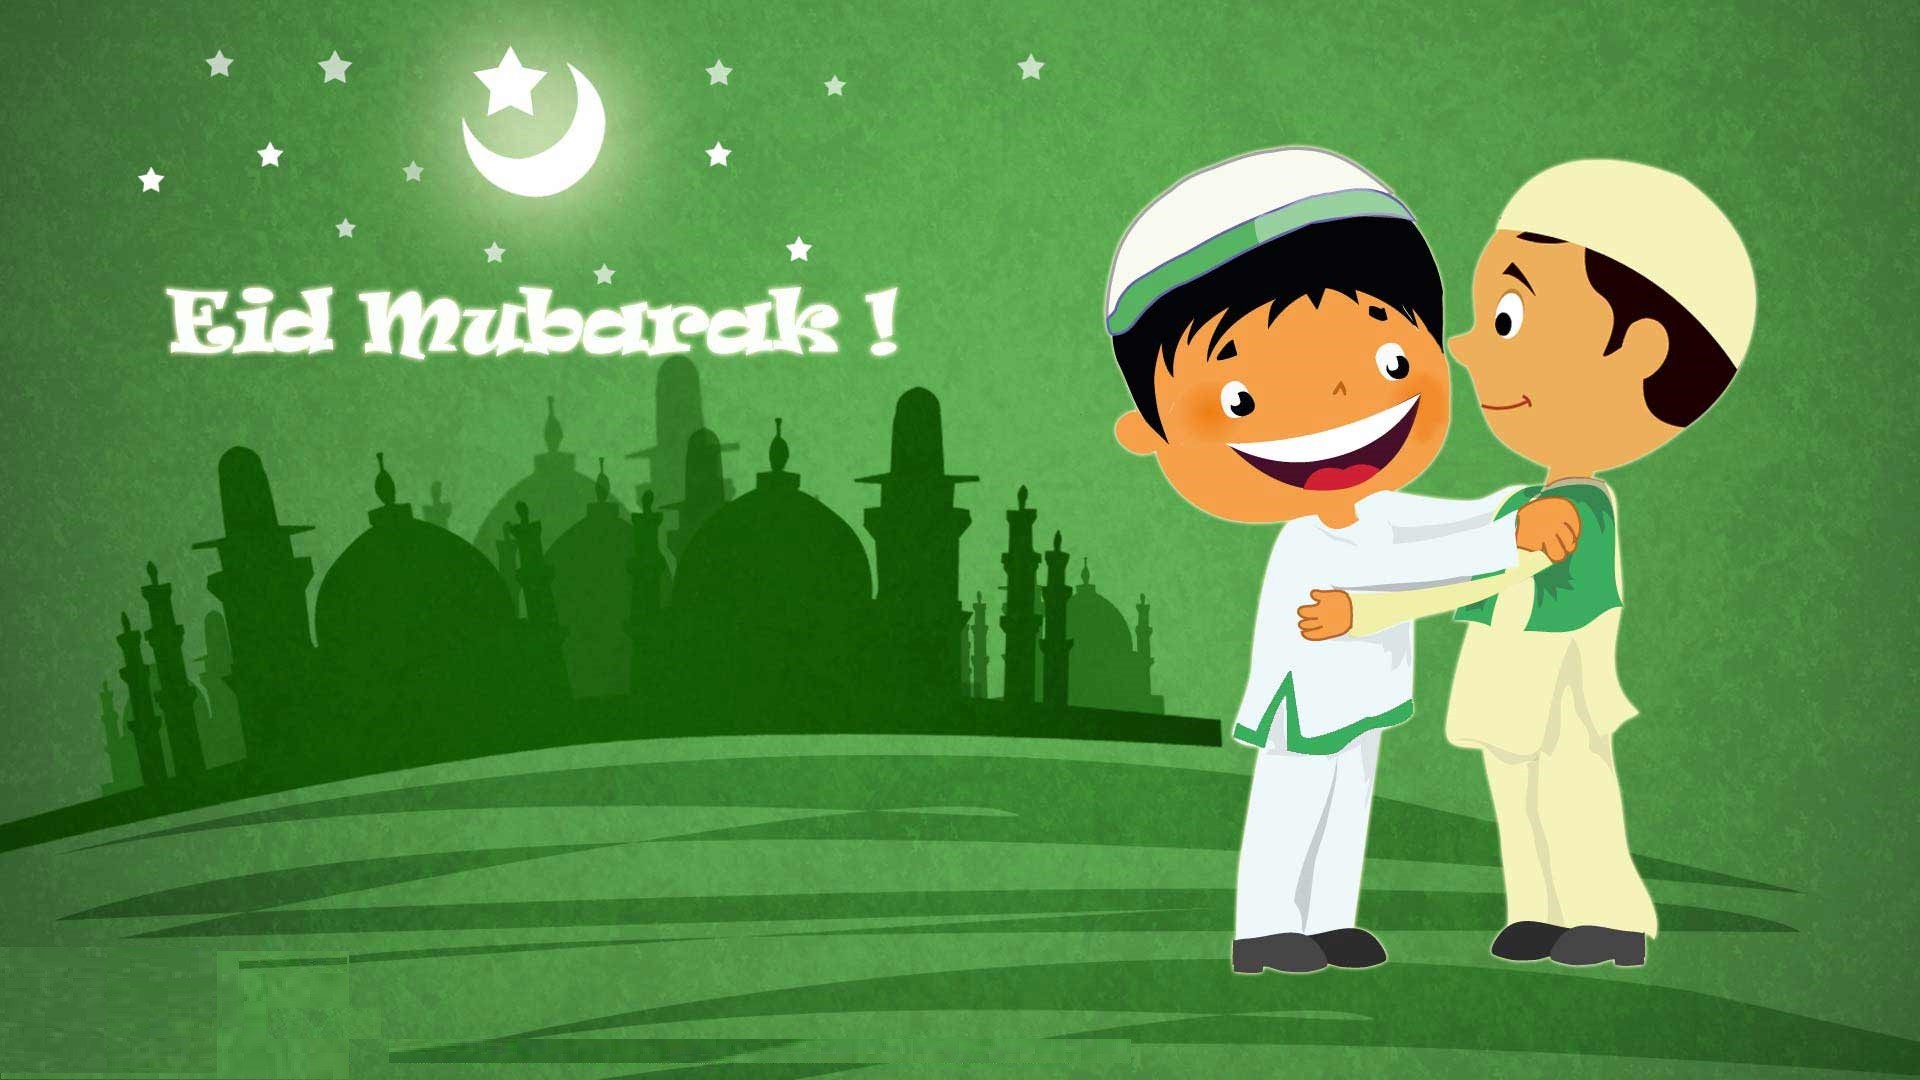 carta da parati eid ke,cartone animato,verde,cartone animato,illustrazione,animazione